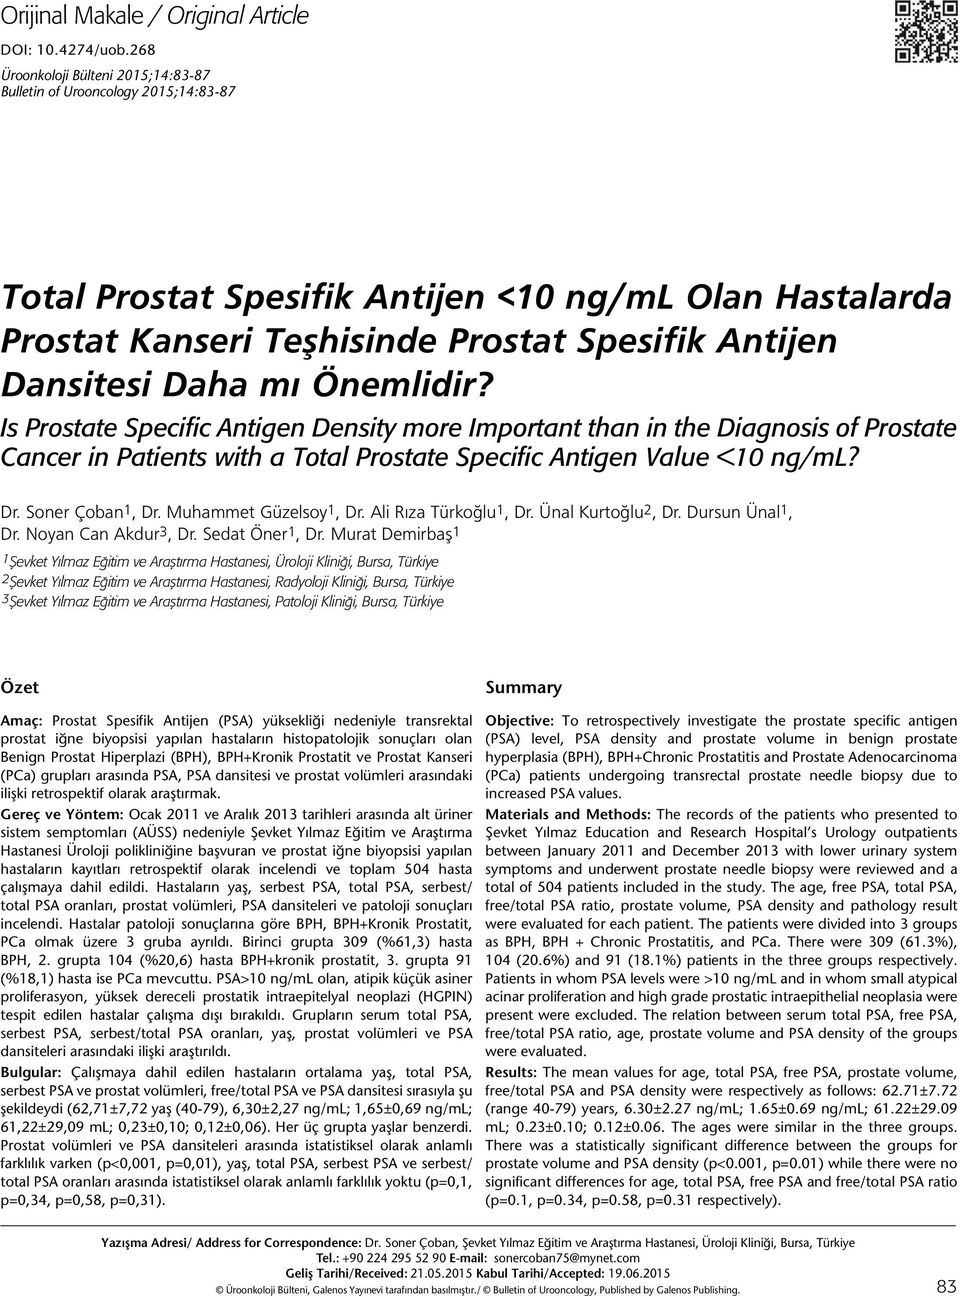 mı Önemlidir? Is Prostate Specific Antigen Density more Important than in the Diagnosis of Prostate Cancer in Patients with a Total Prostate Specific Antigen Value <10 ng/ml? Dr. Soner Çoban 1, Dr.